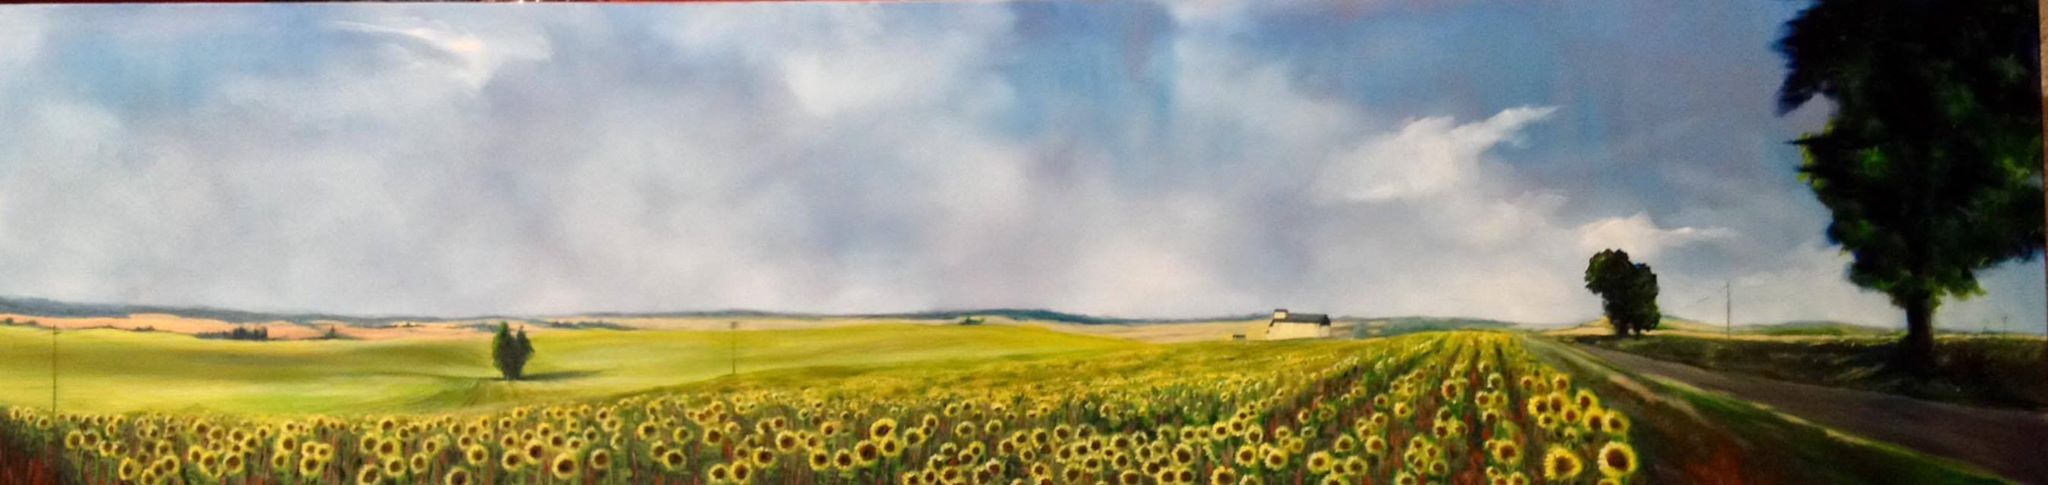 Silo and Sunflowers - painting by Amanda Rackowe